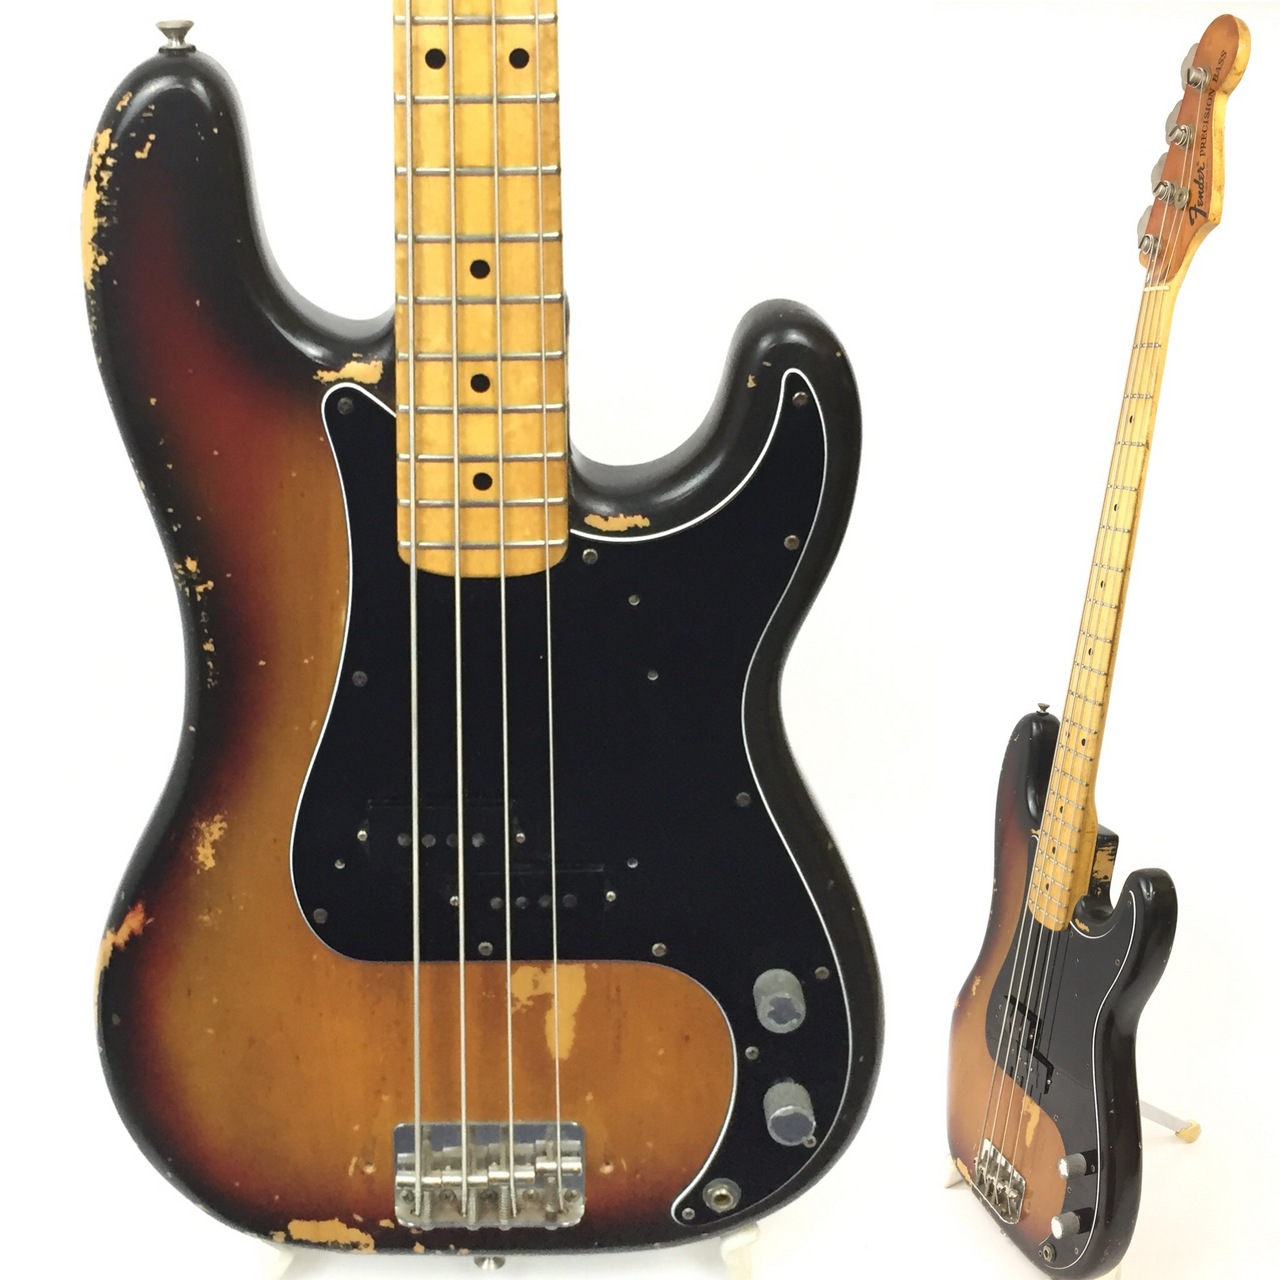 Fender Precision Bass Suburst 1974年製買取りました！#船橋 #買取